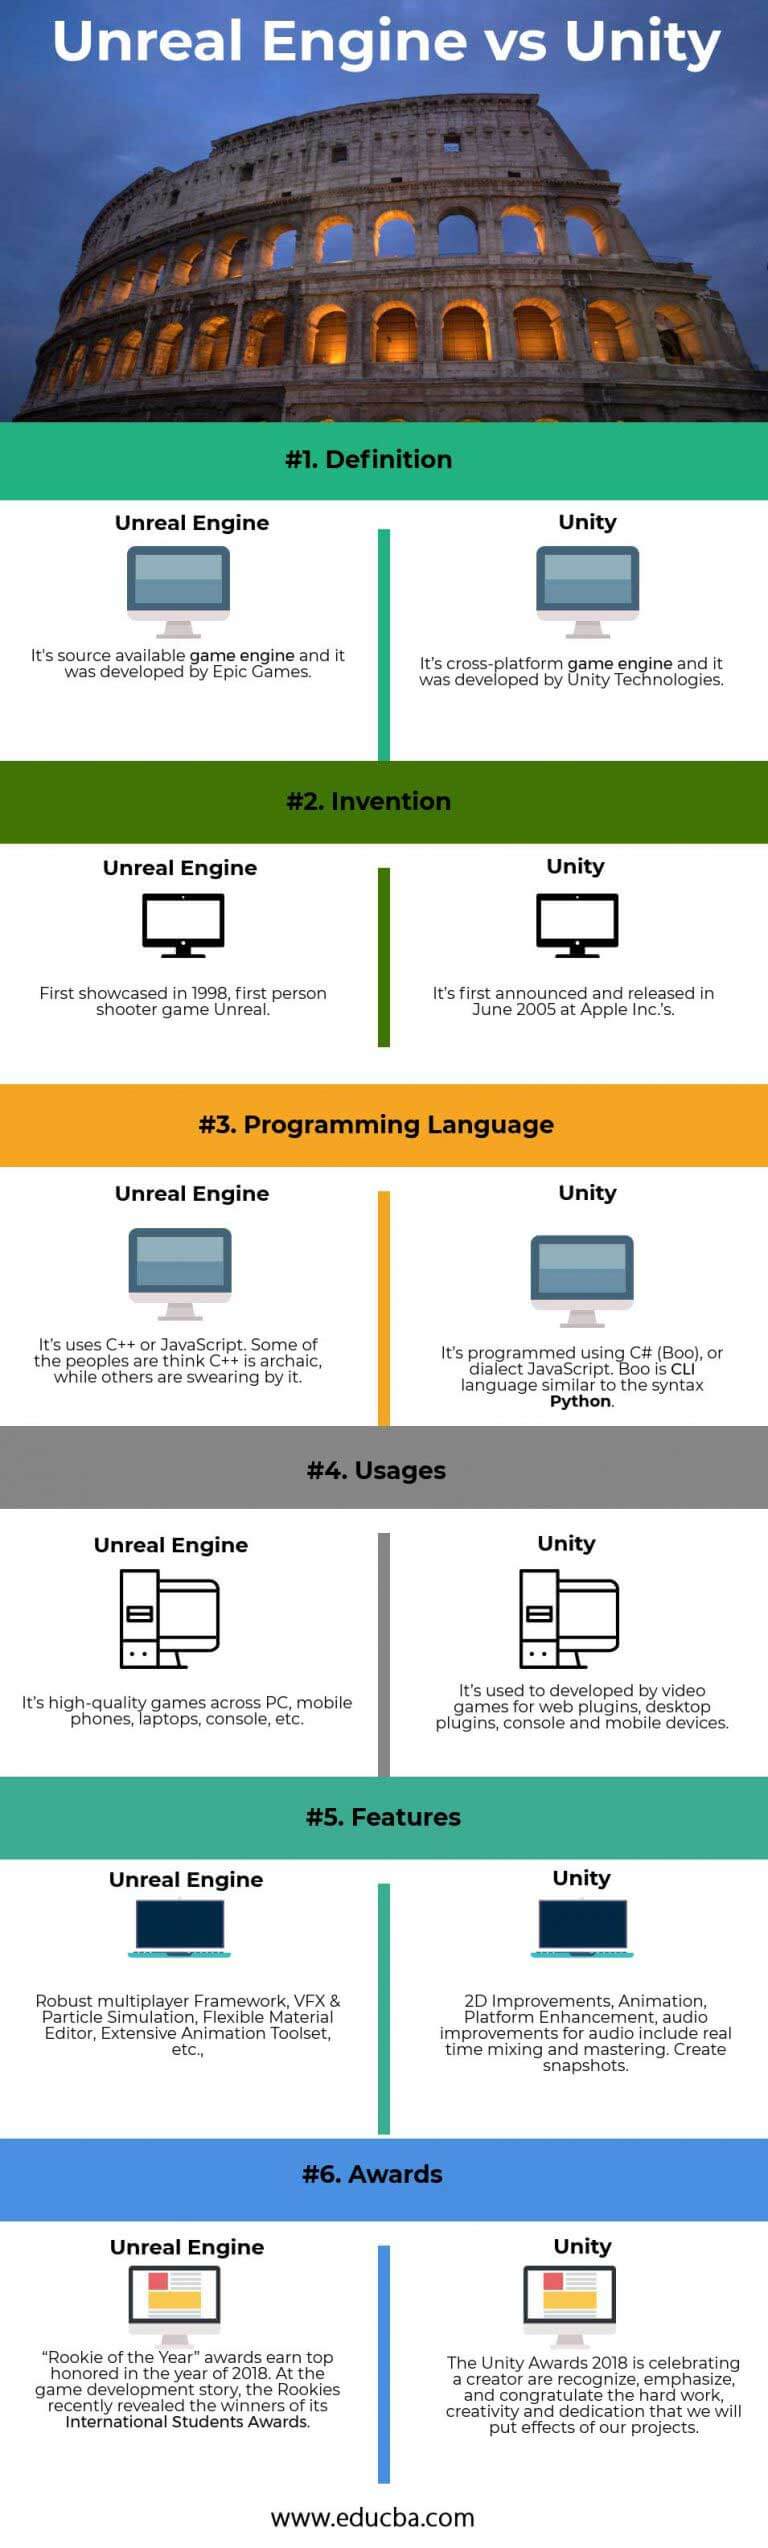 unity game engine vs unreal